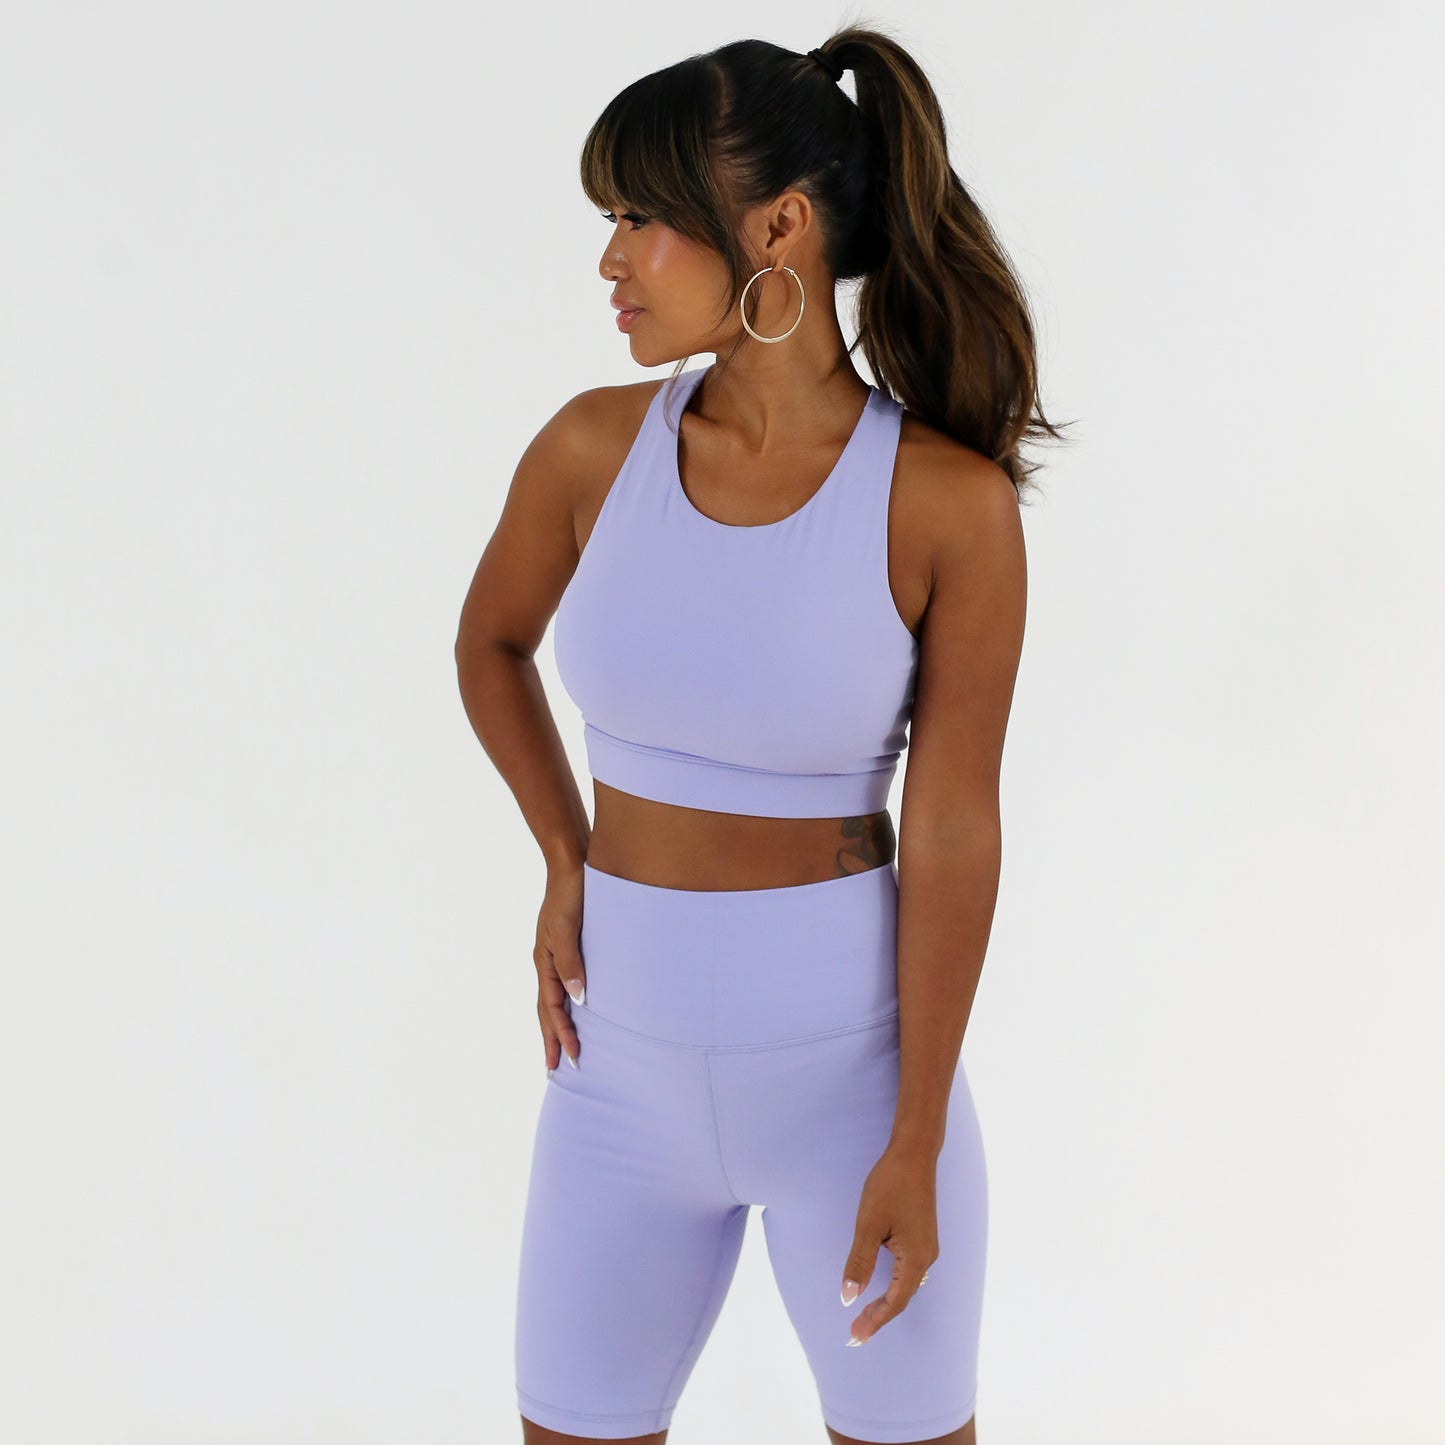 Celer high neck sports bra + shorts try on haul ☁️🌸💓 The new high n